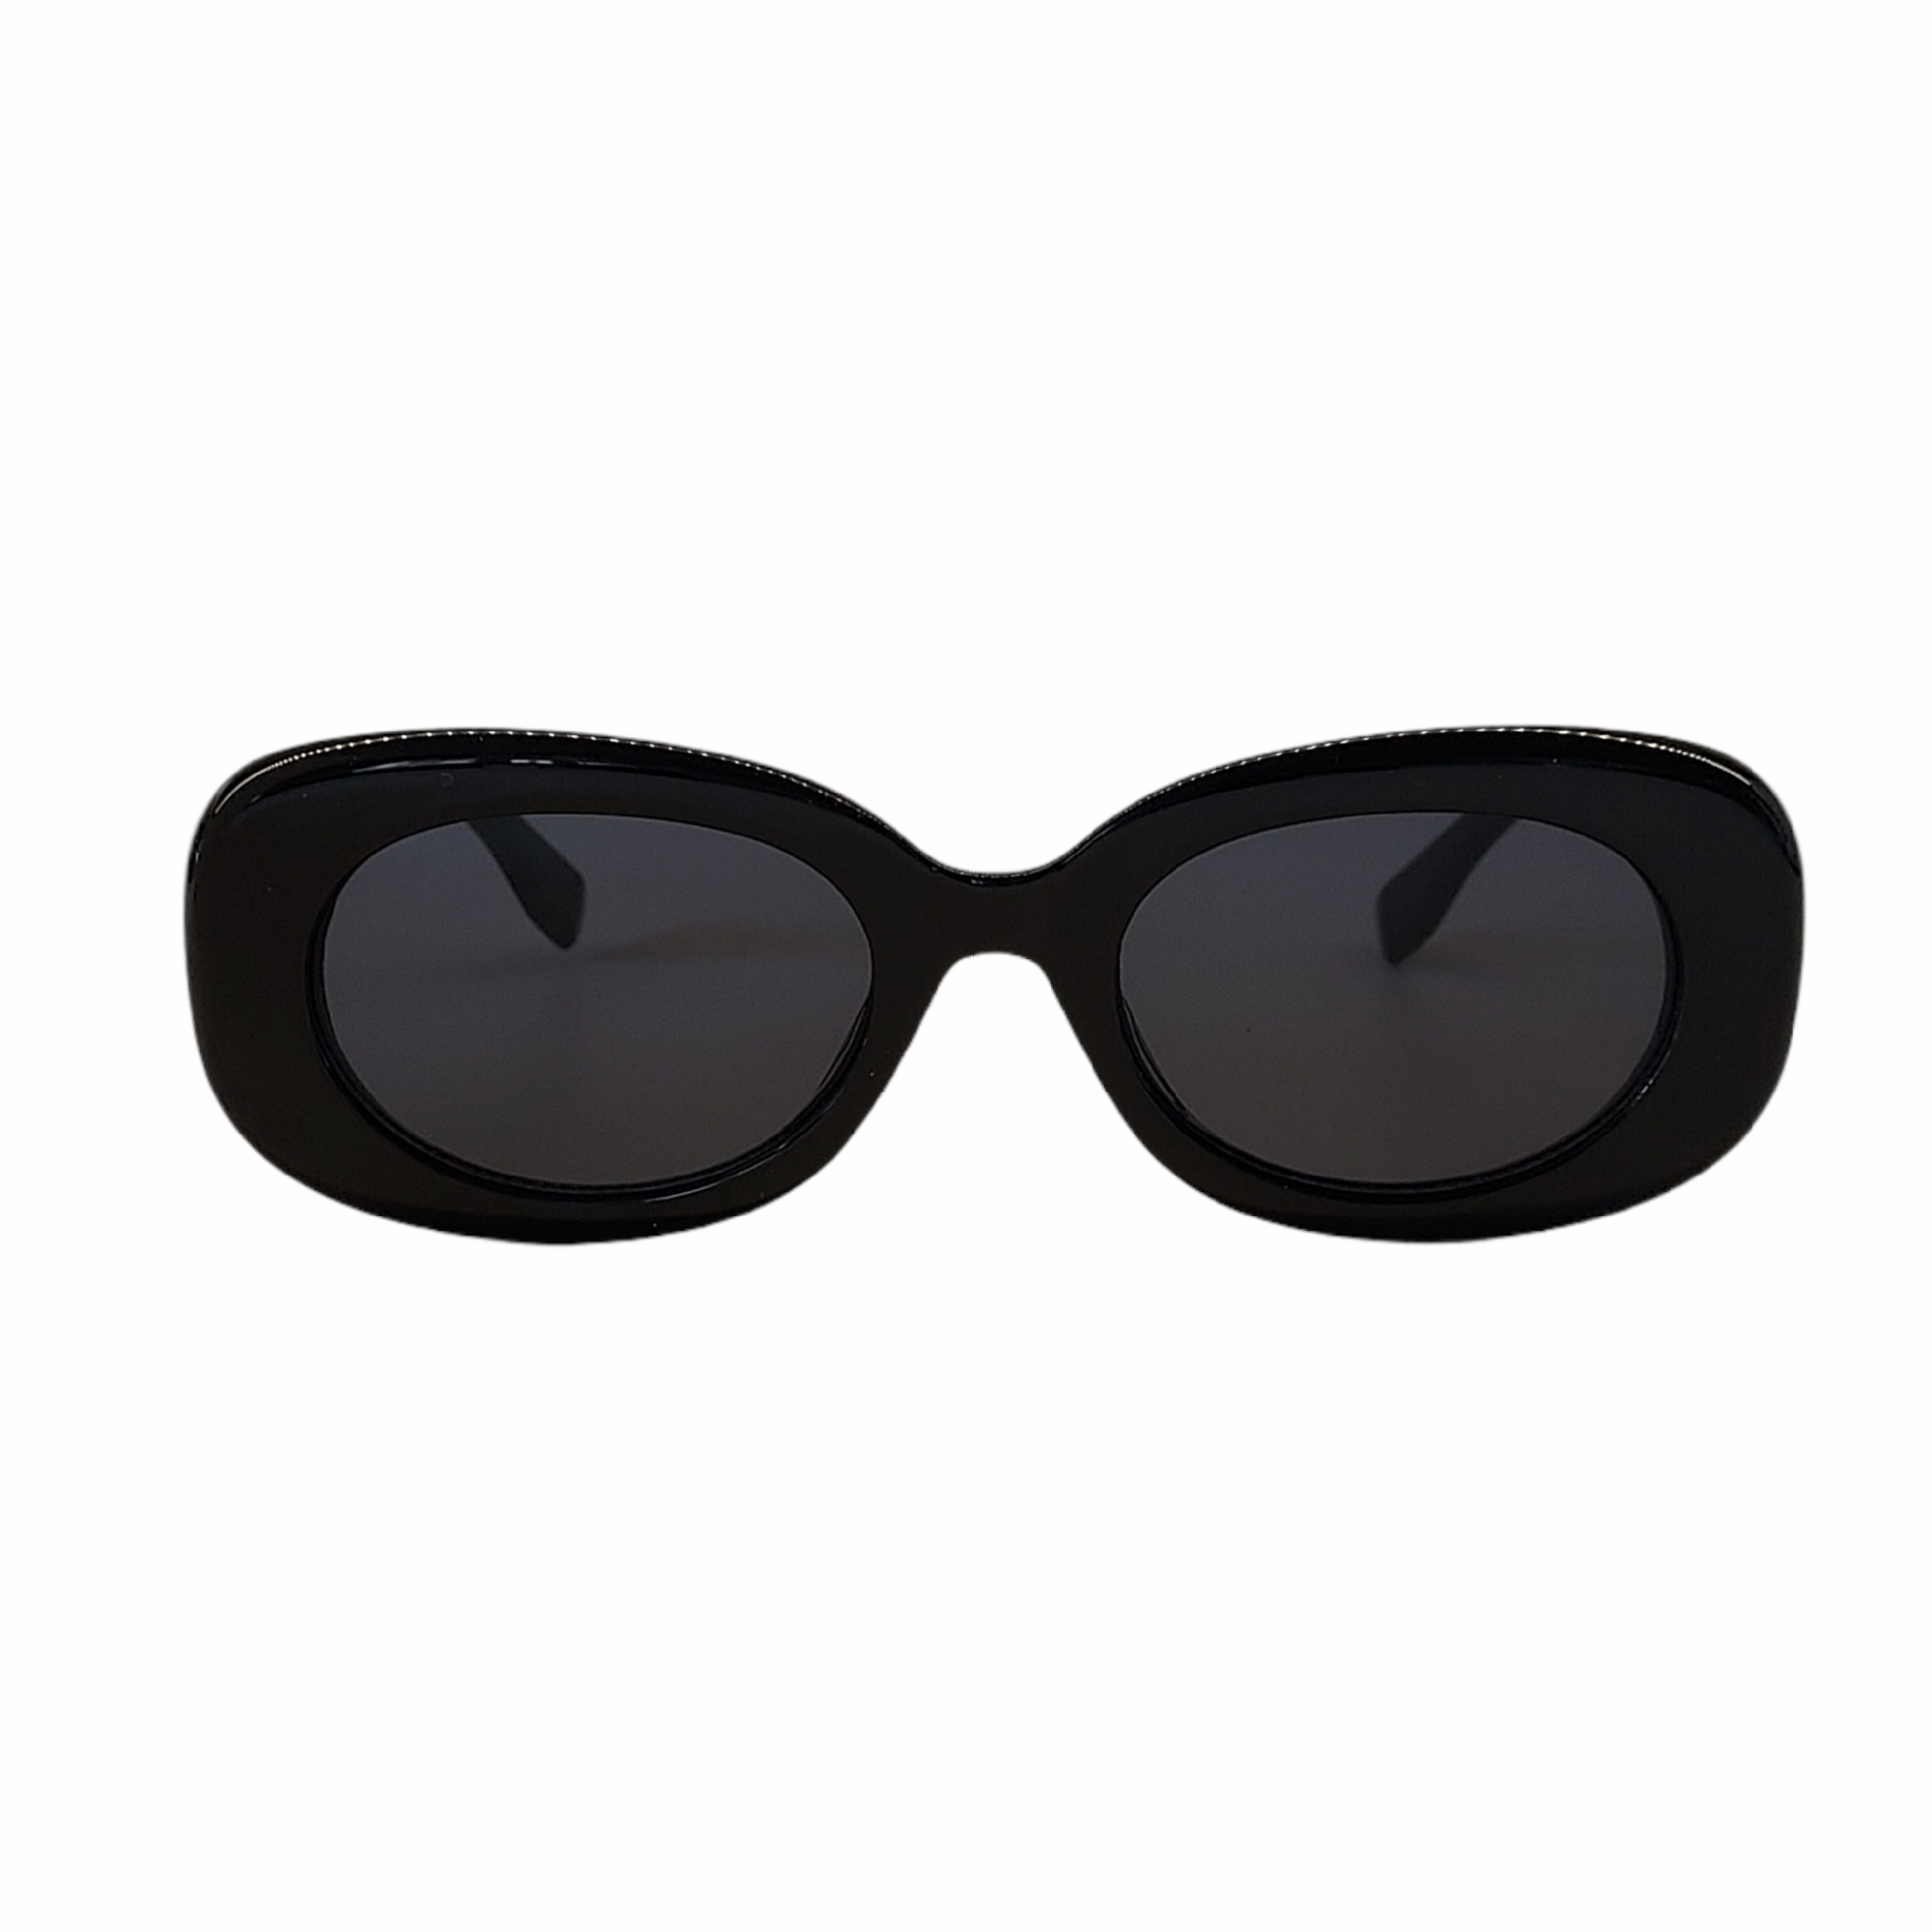 Oval Slide Promo Sunglasses